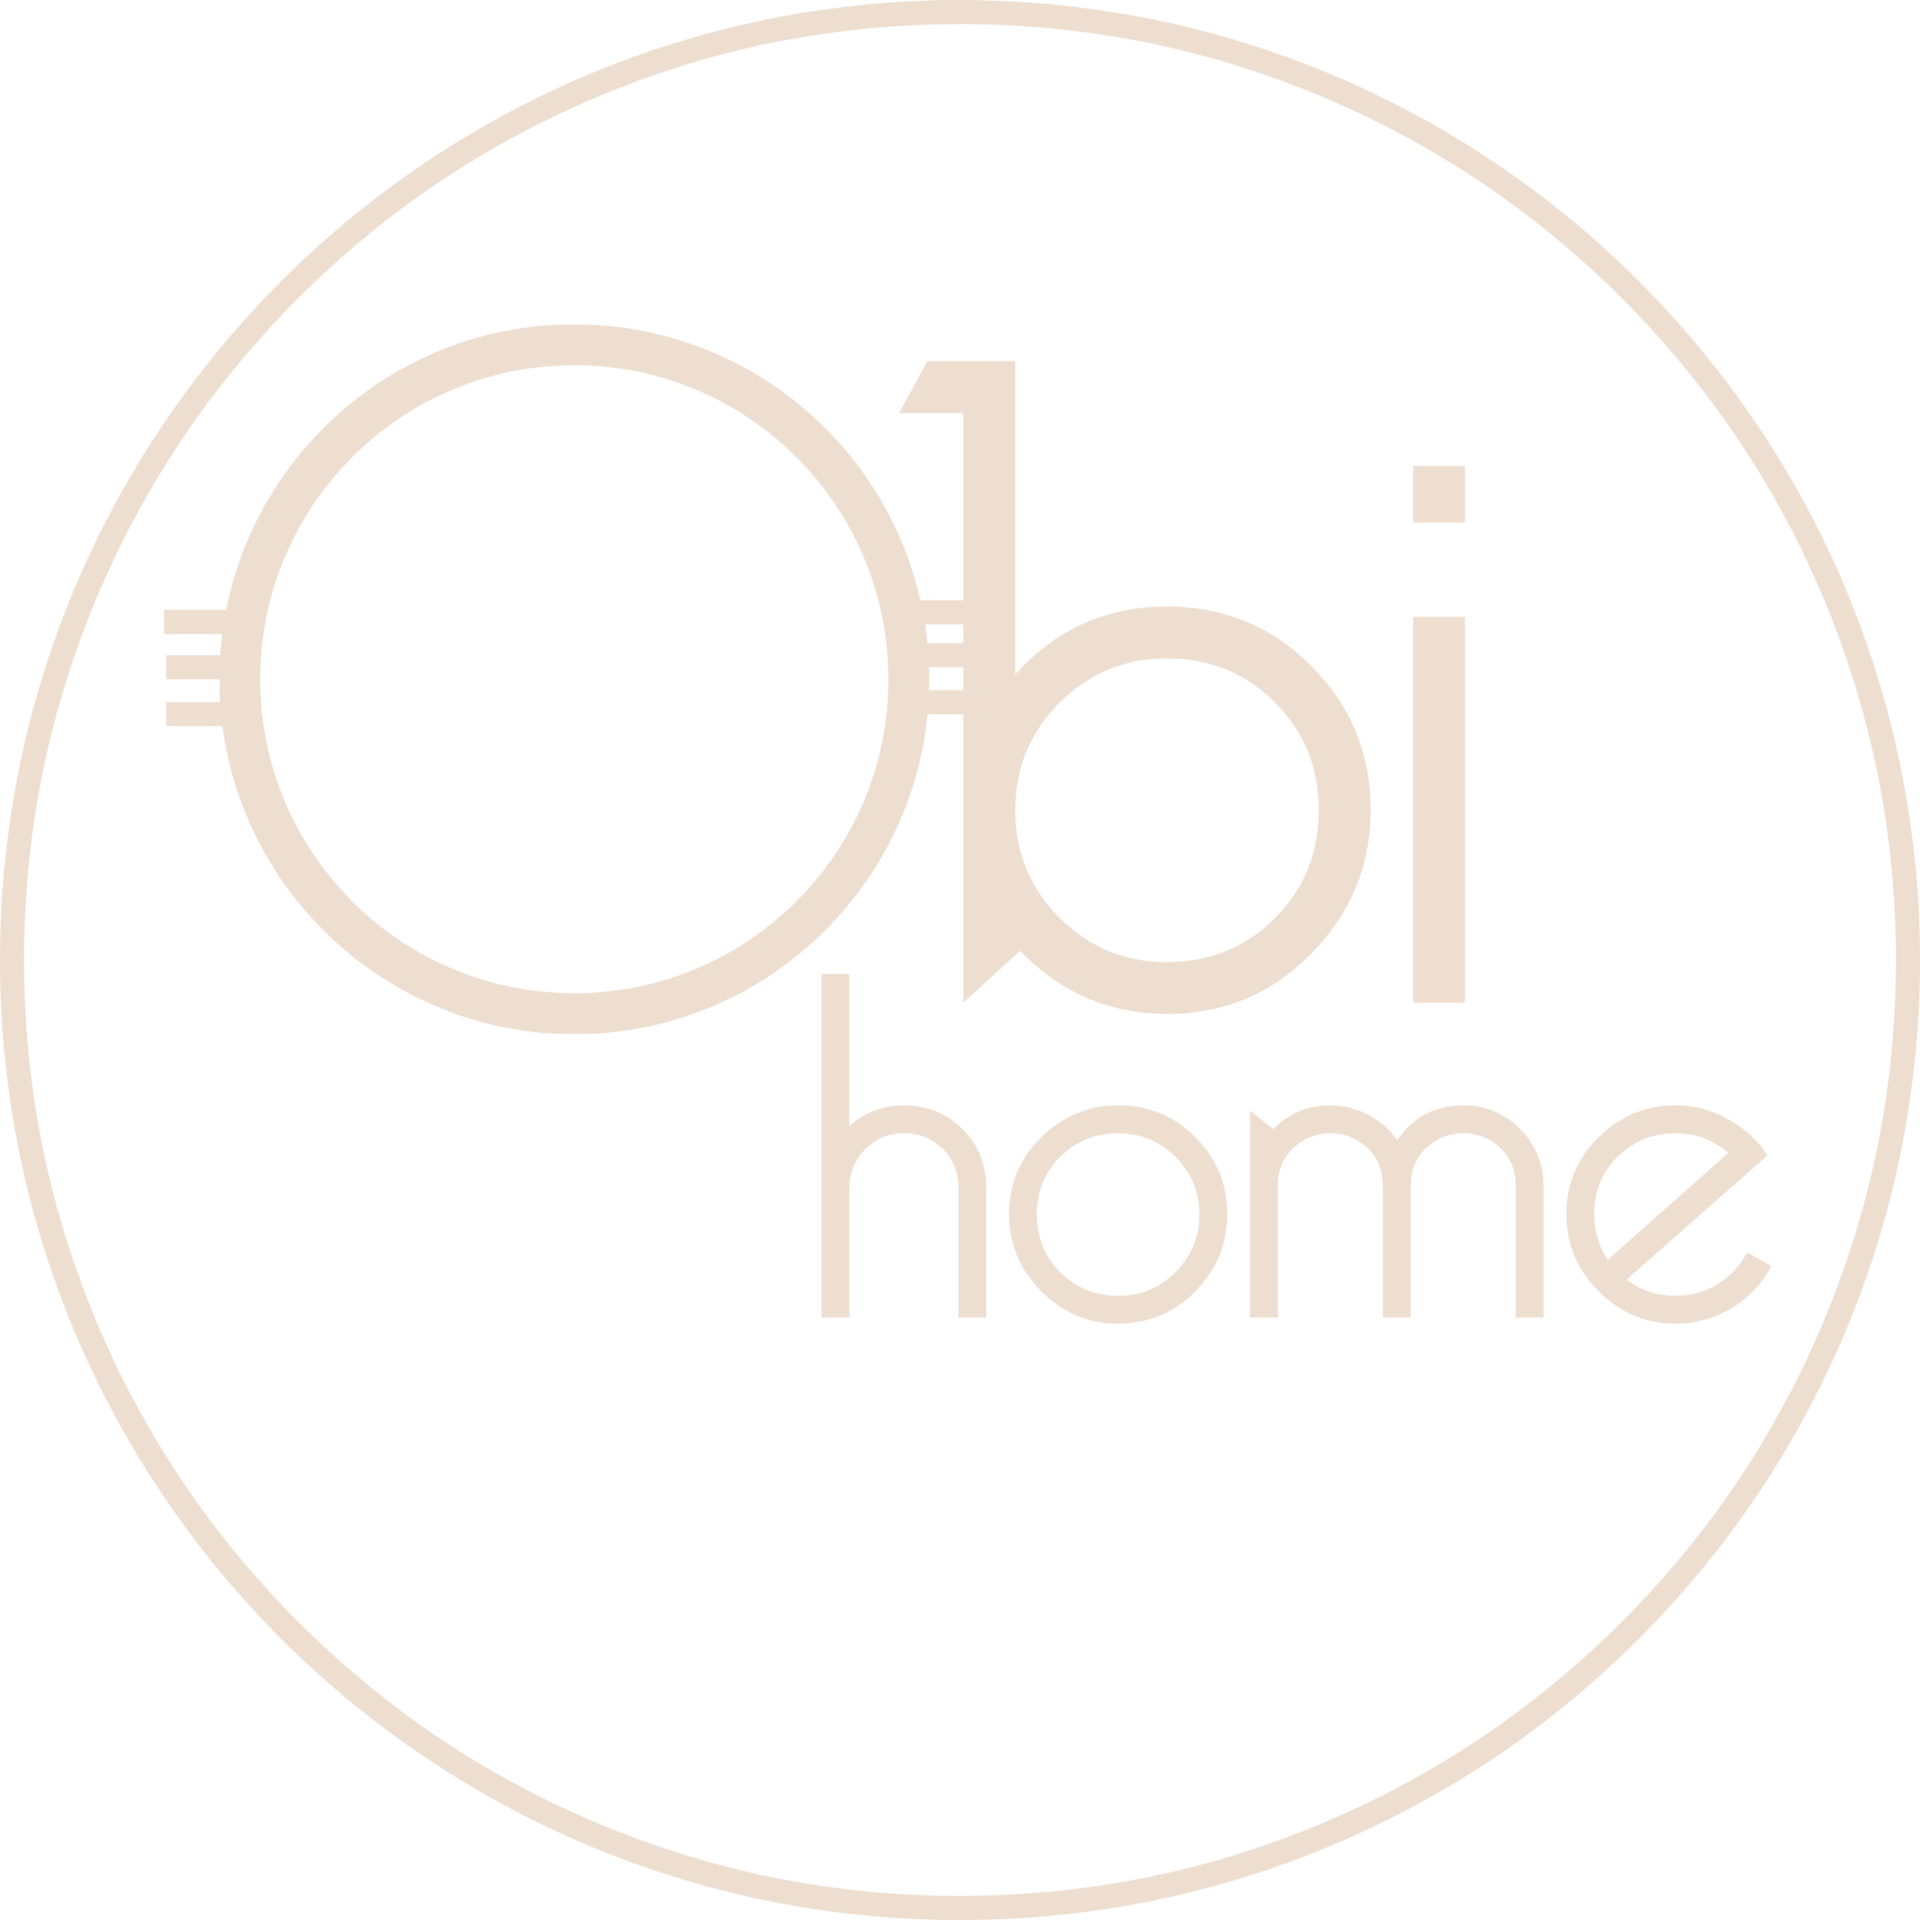 Obi Home